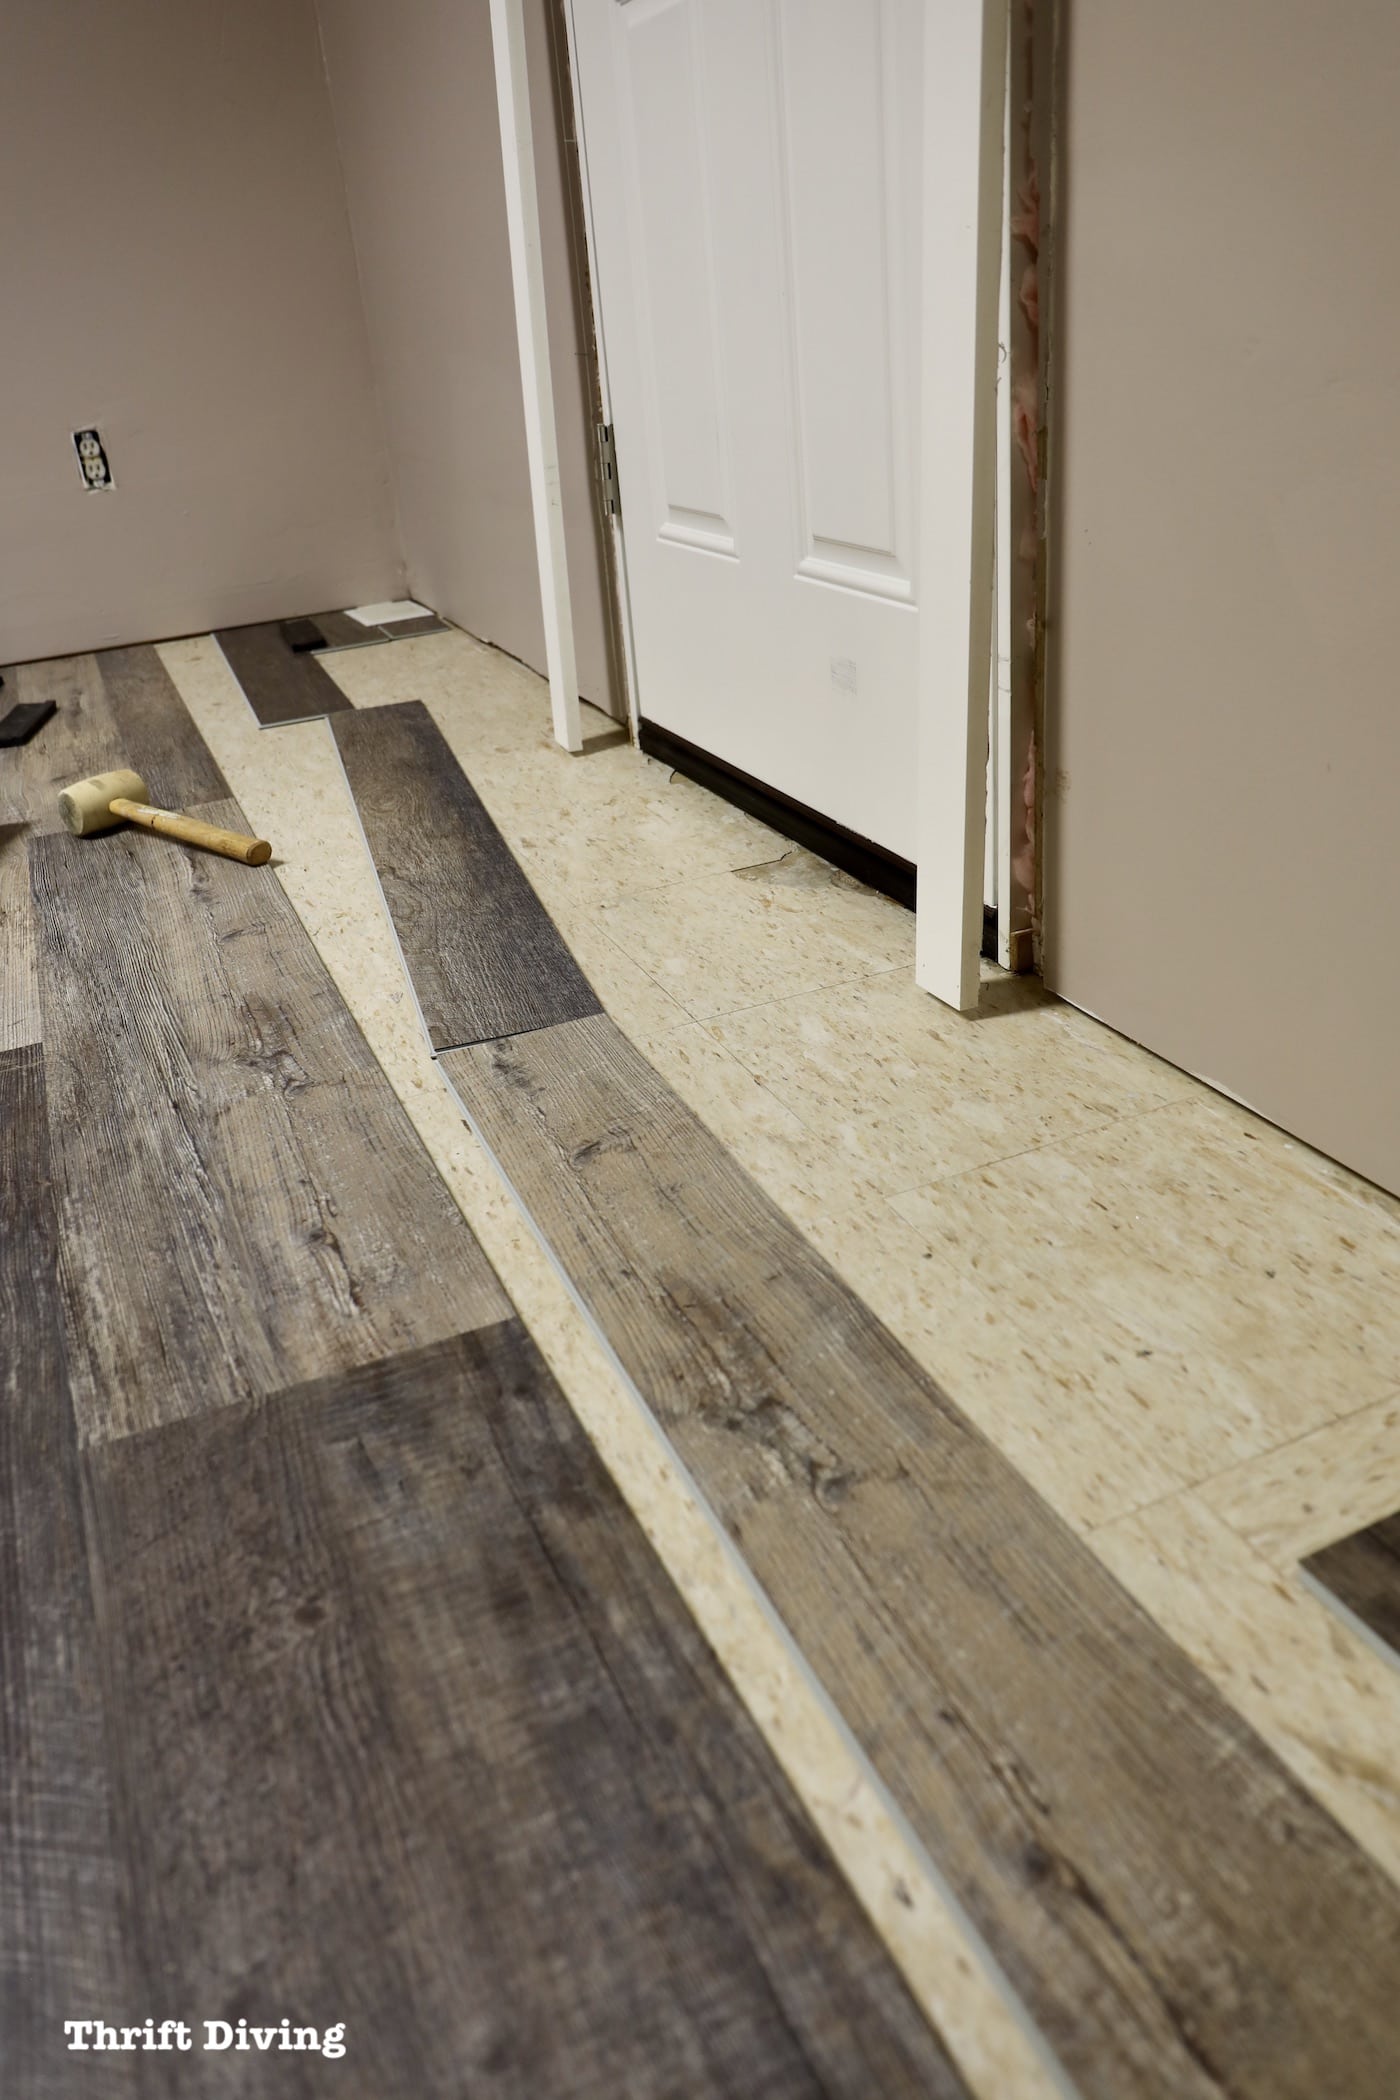 Walkout basement door with vinyl plank flooring tiles to replace - Thrift Diving